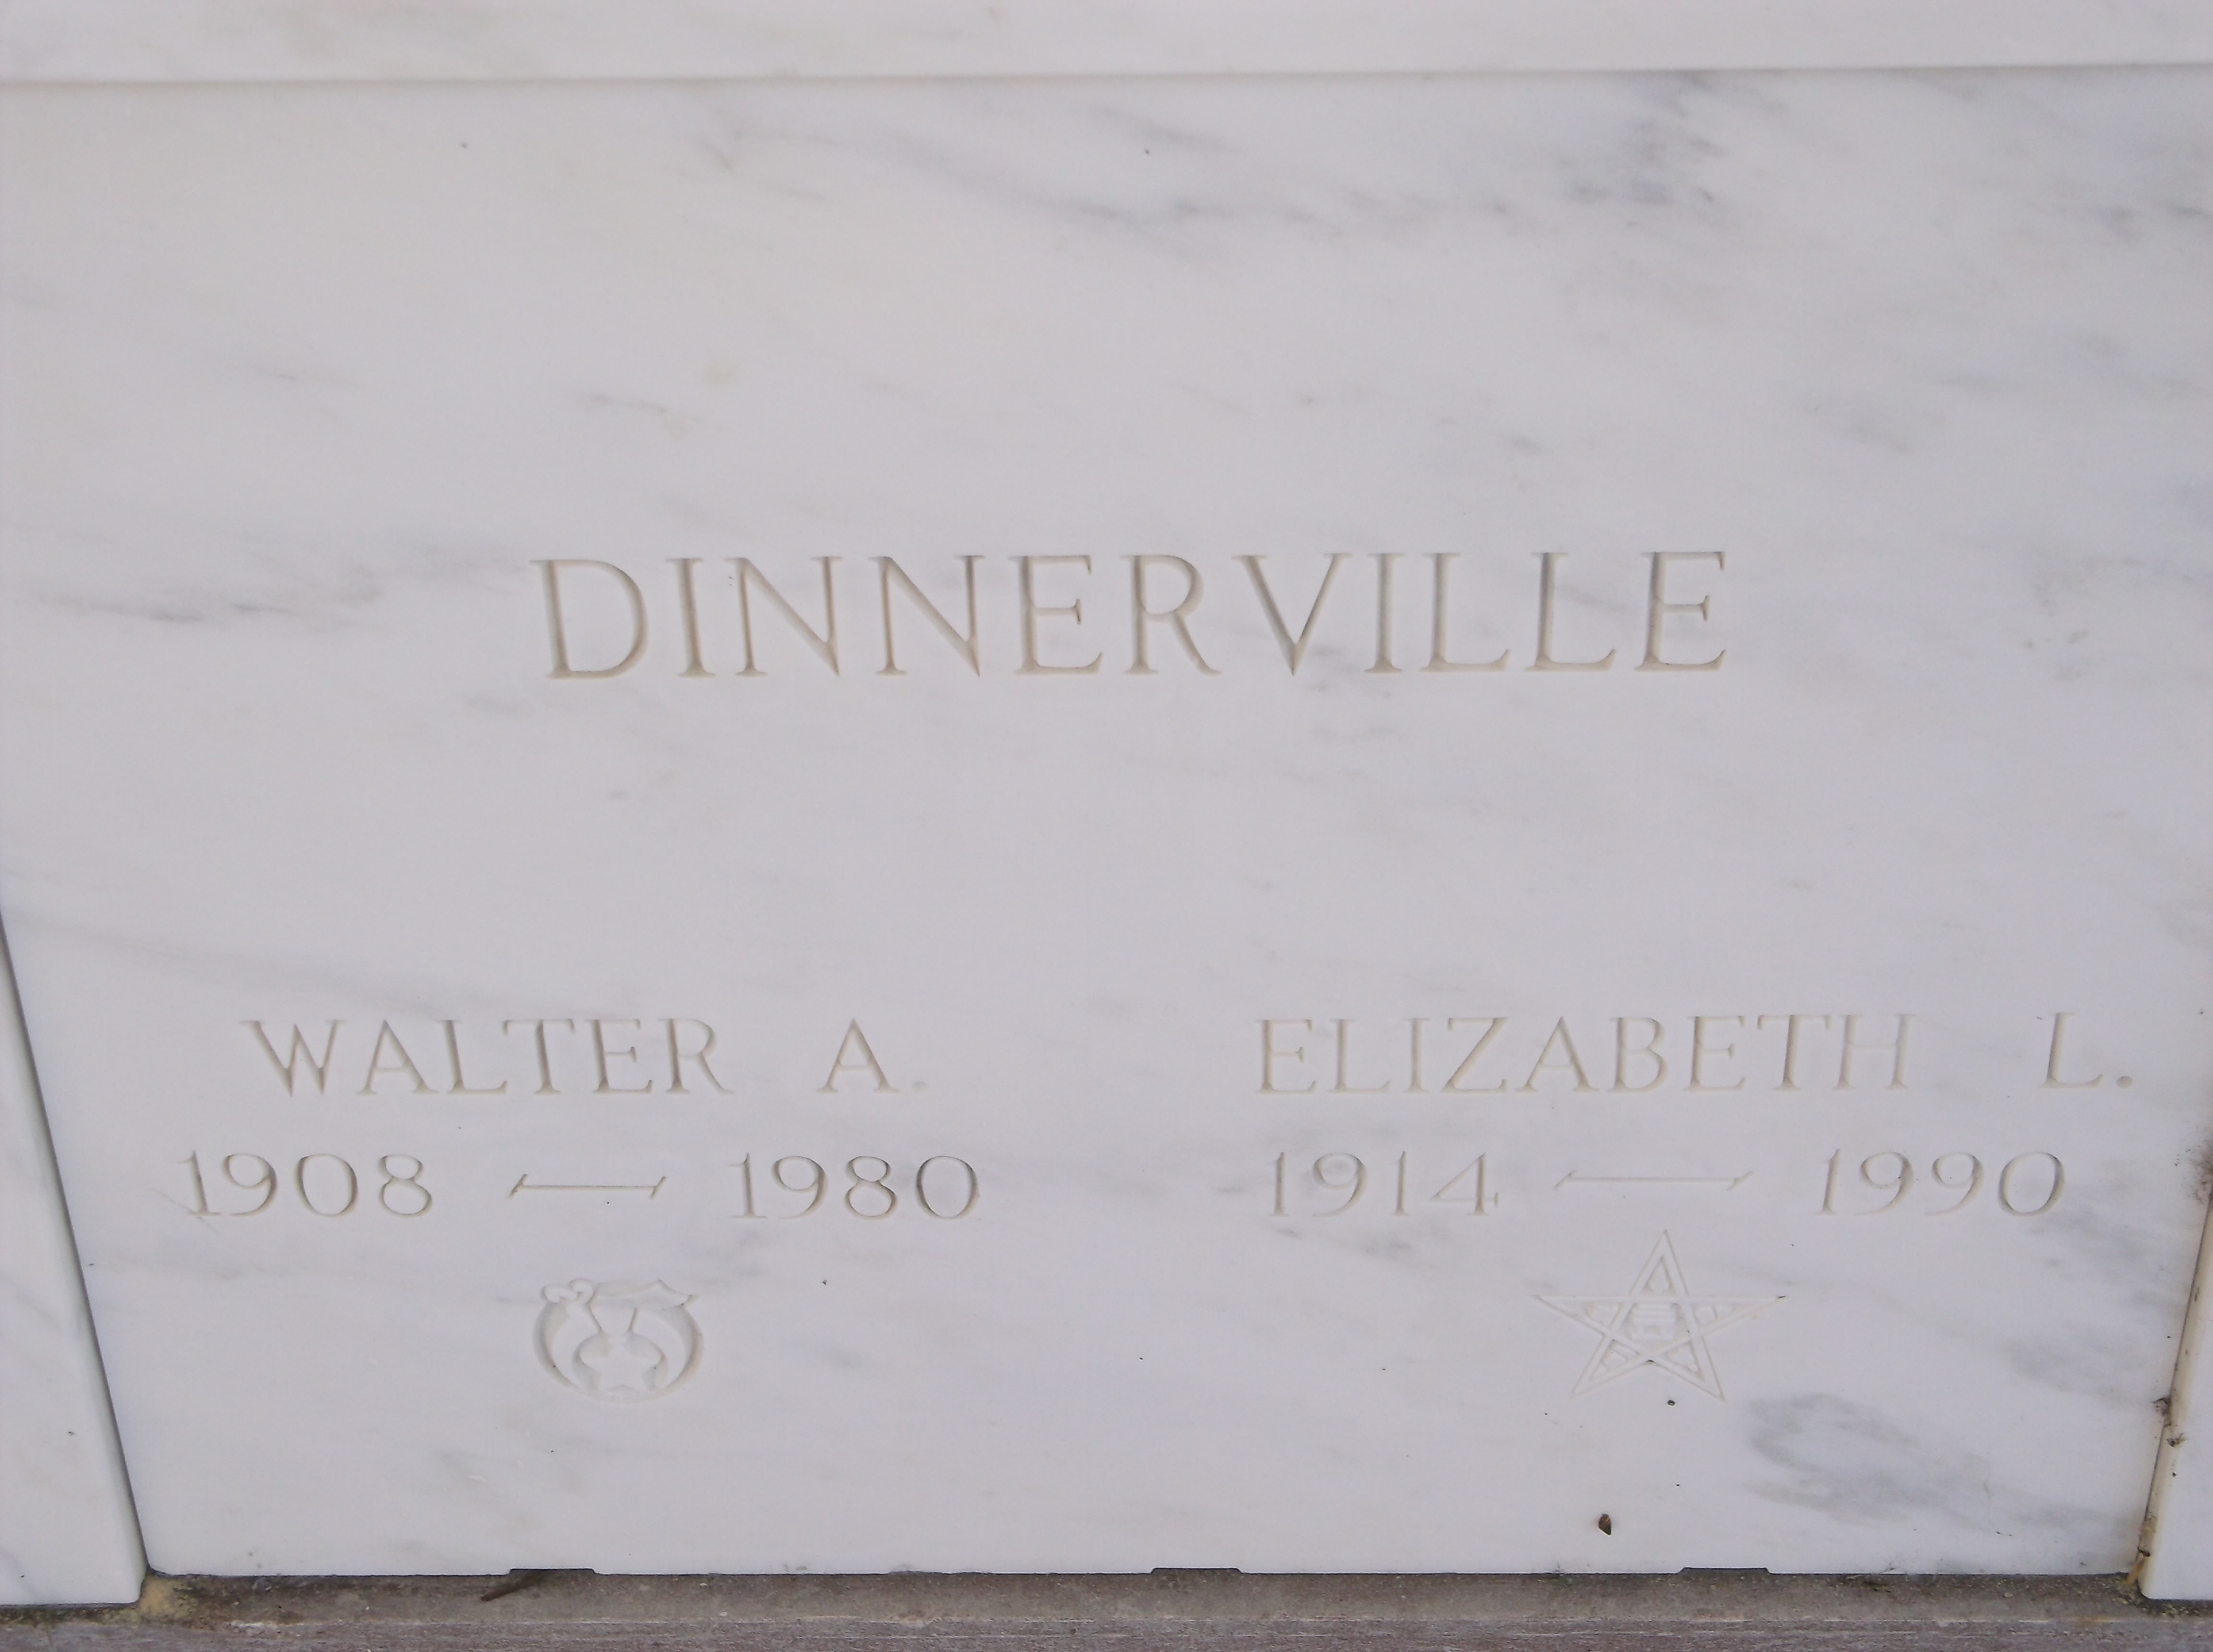 Elizabeth L Dinnerville